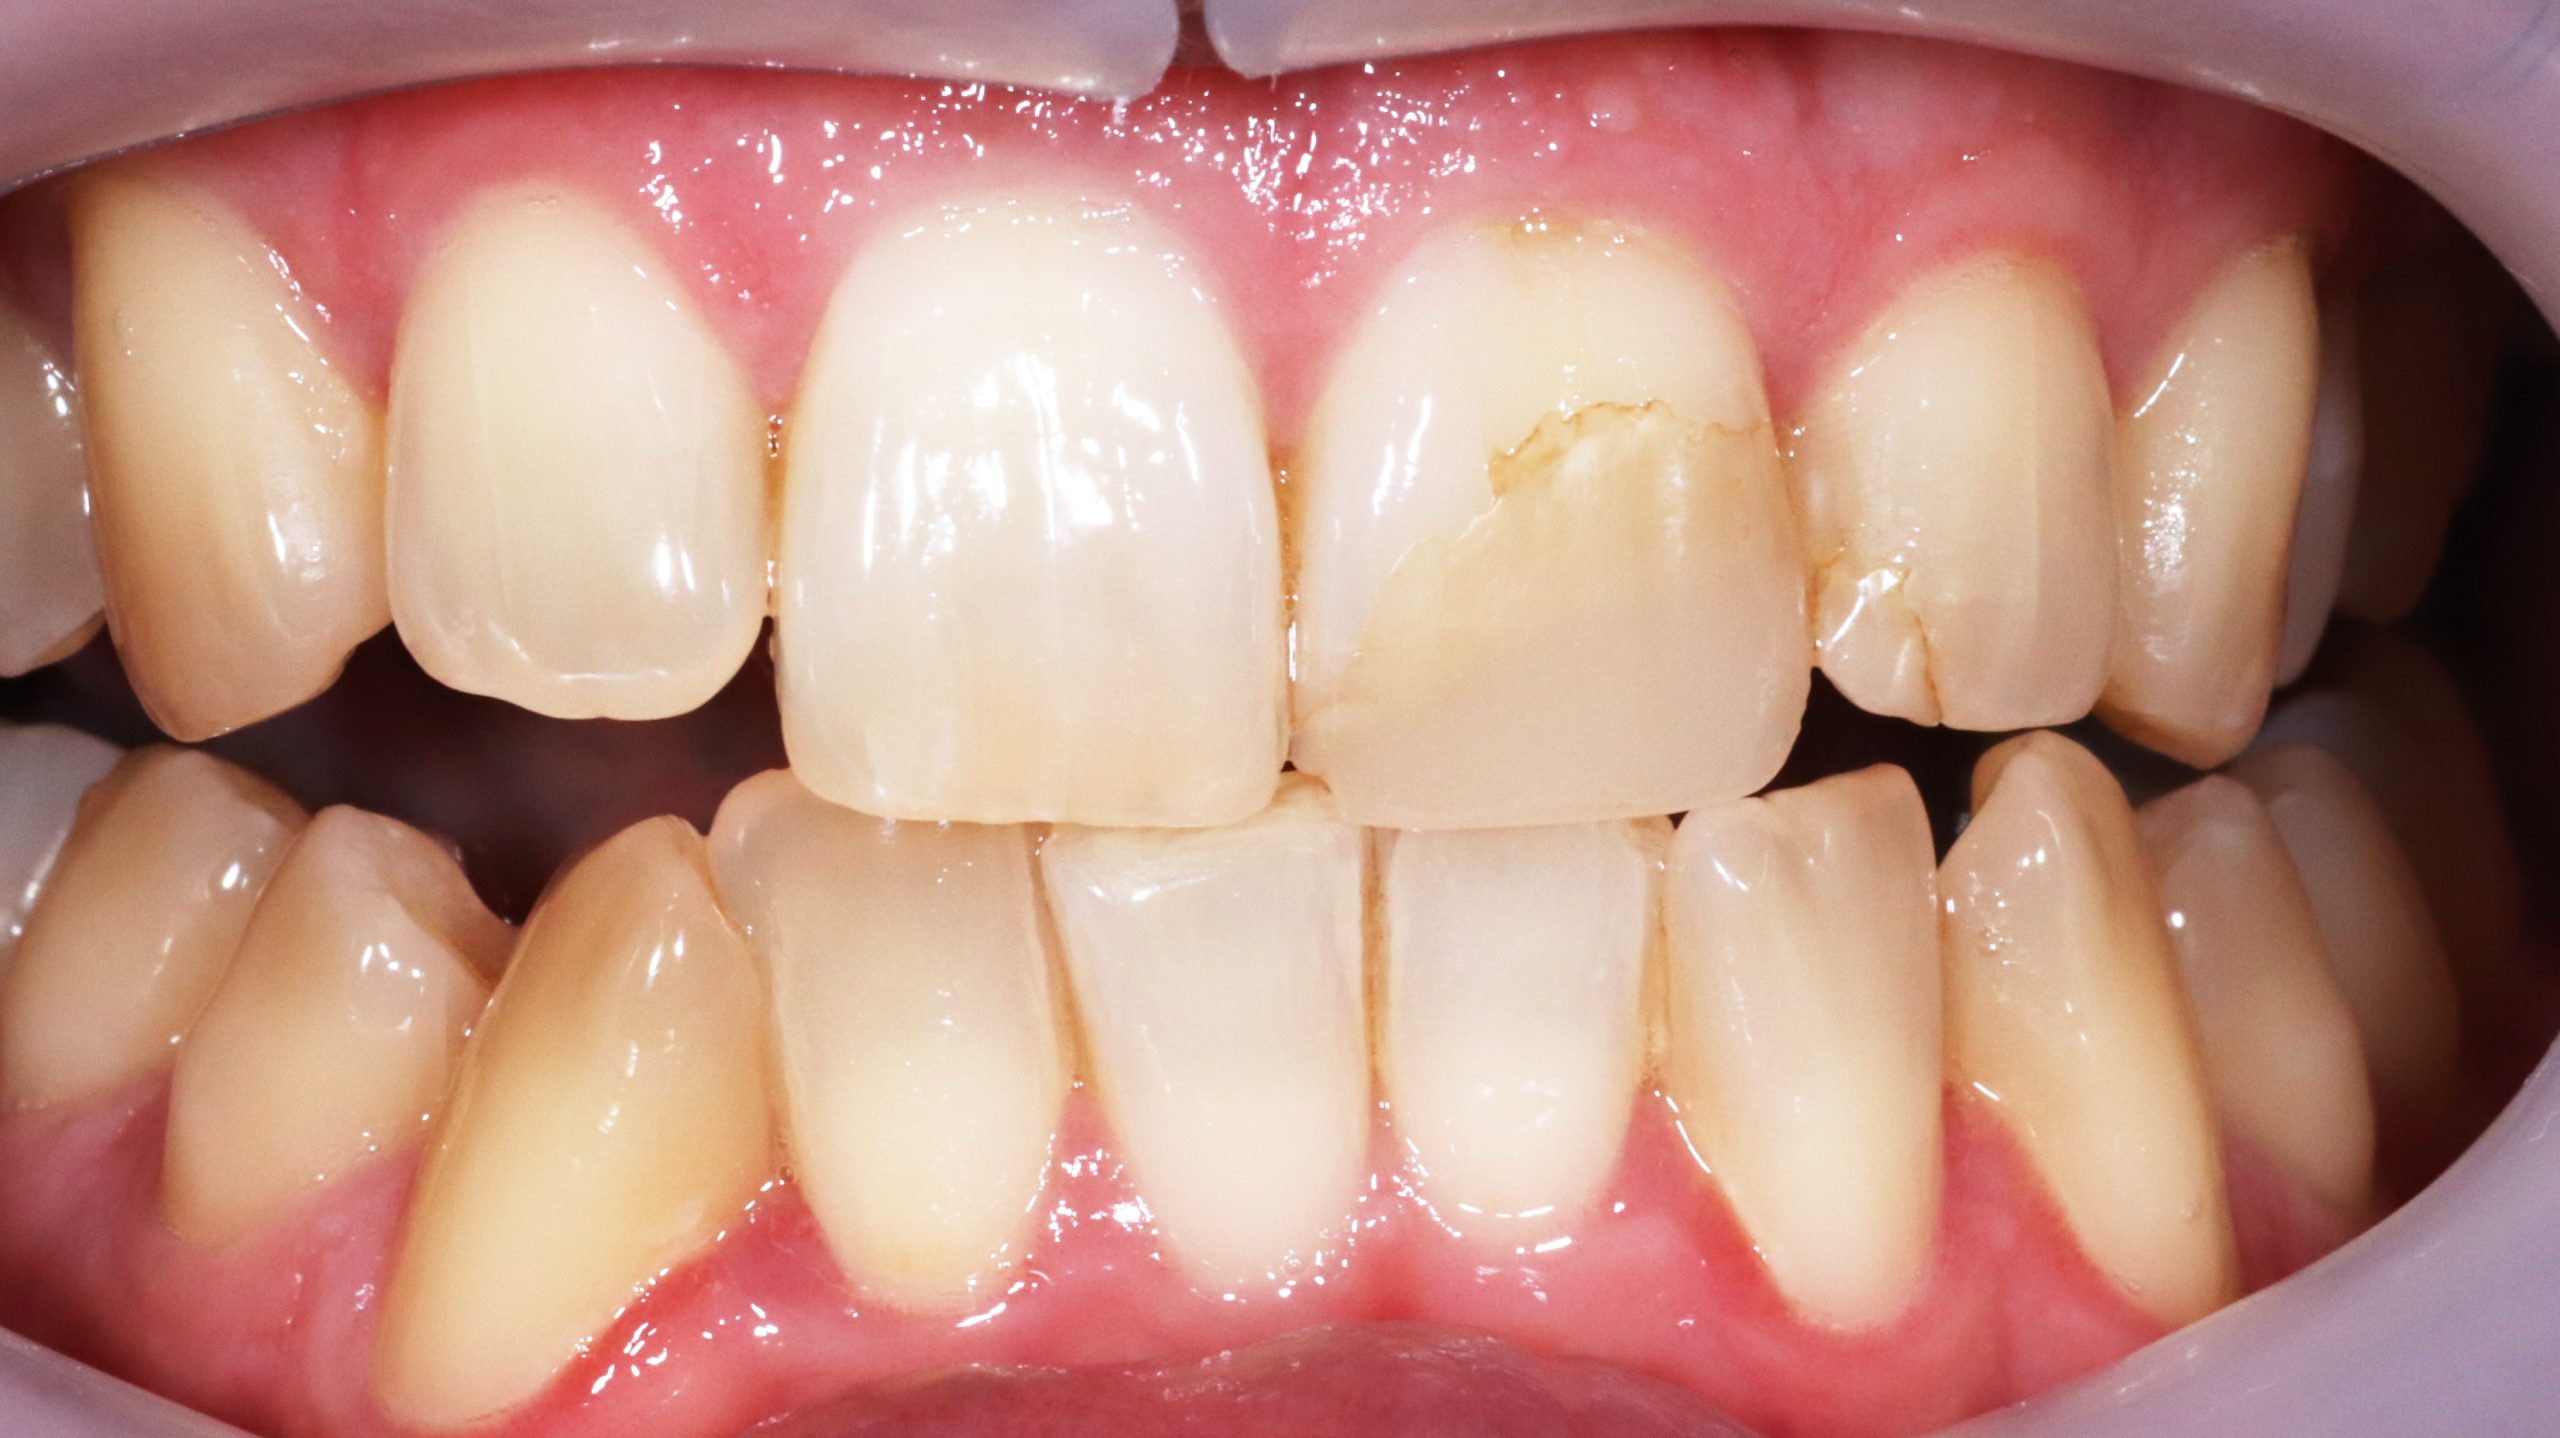 bleaching-tooth-whitening-dental-bleach-treatement-result-before